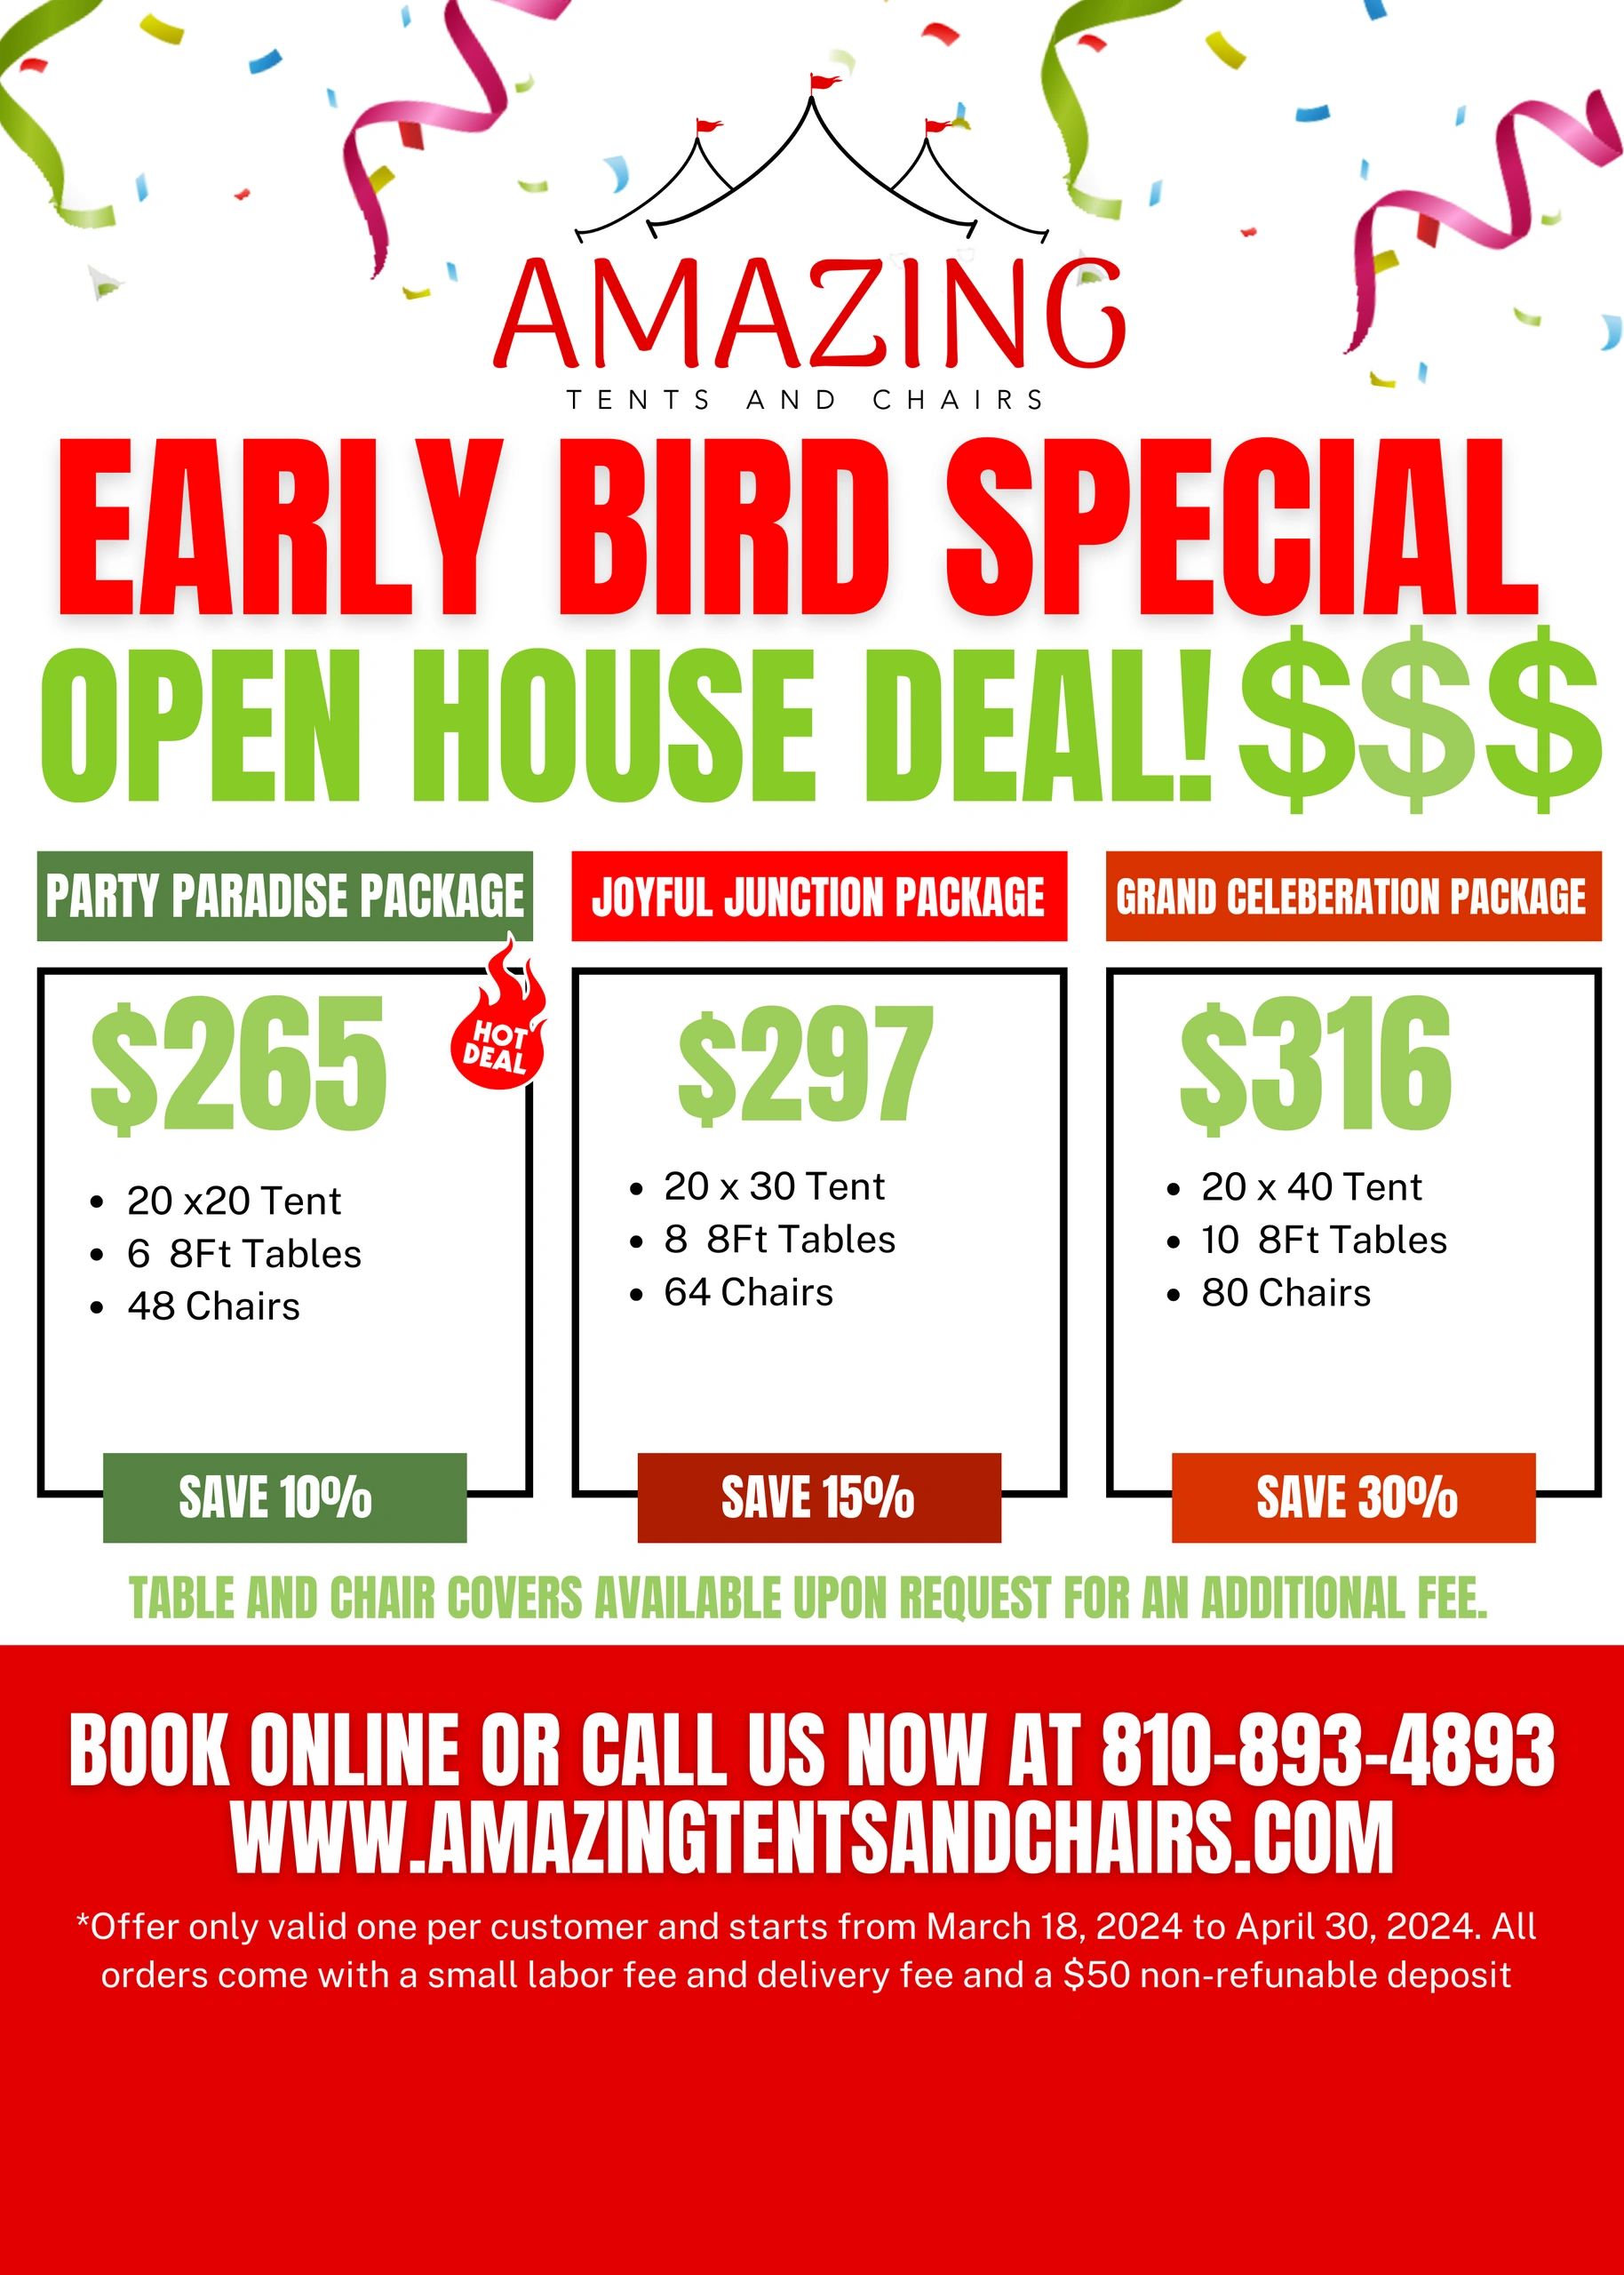 Ealrly Bird Special Deals! 